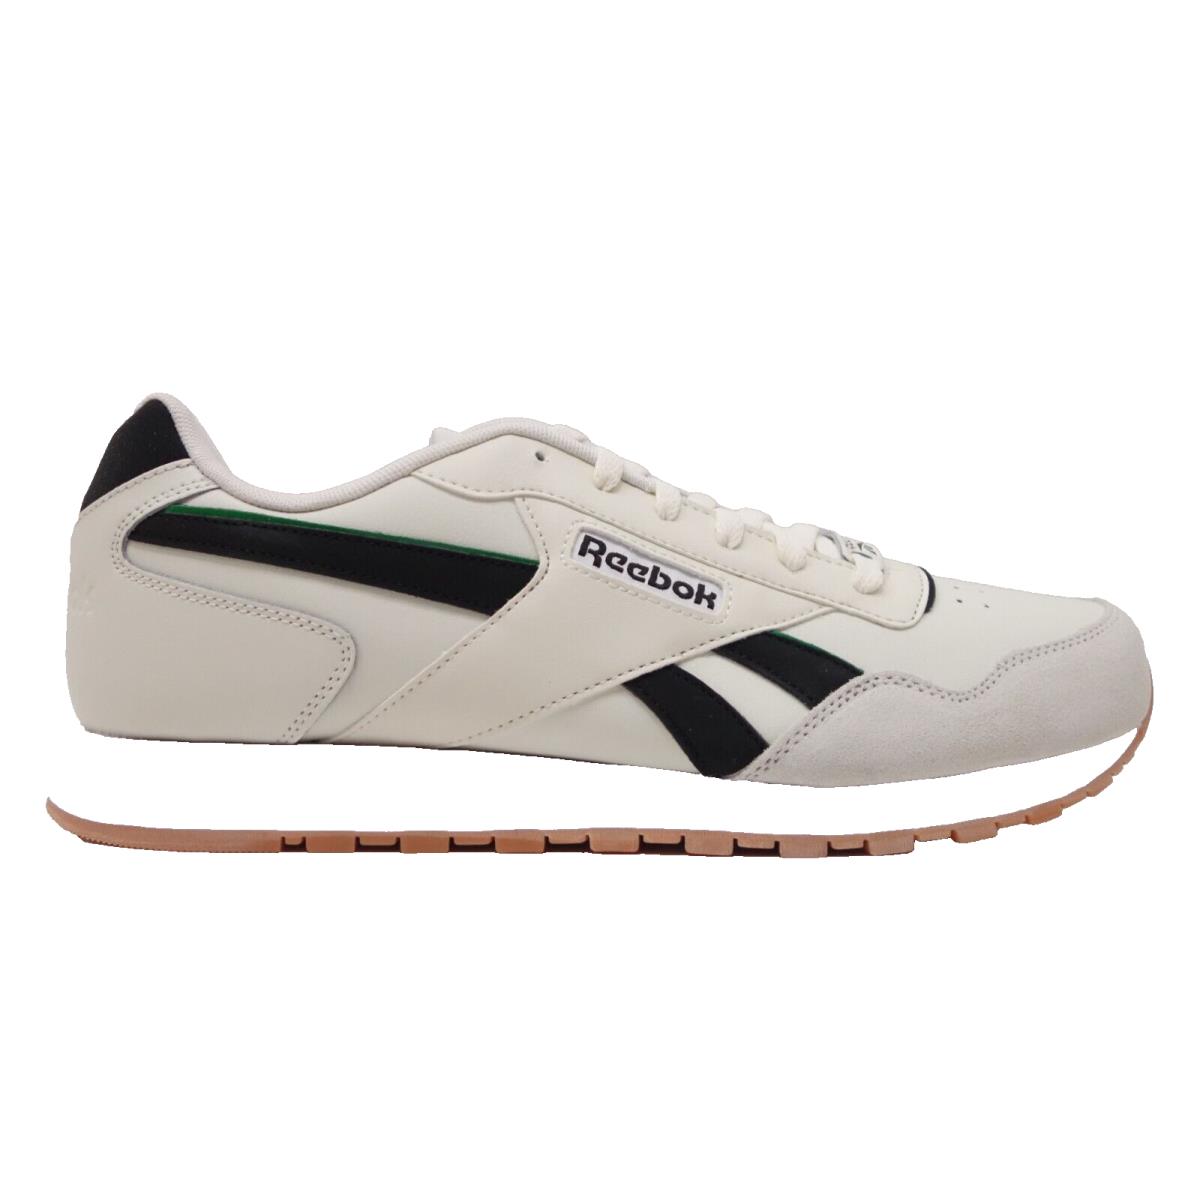 Reebok Mens White Classic Harman Running Trail Athletic Shoes Size US 13 M EU 47